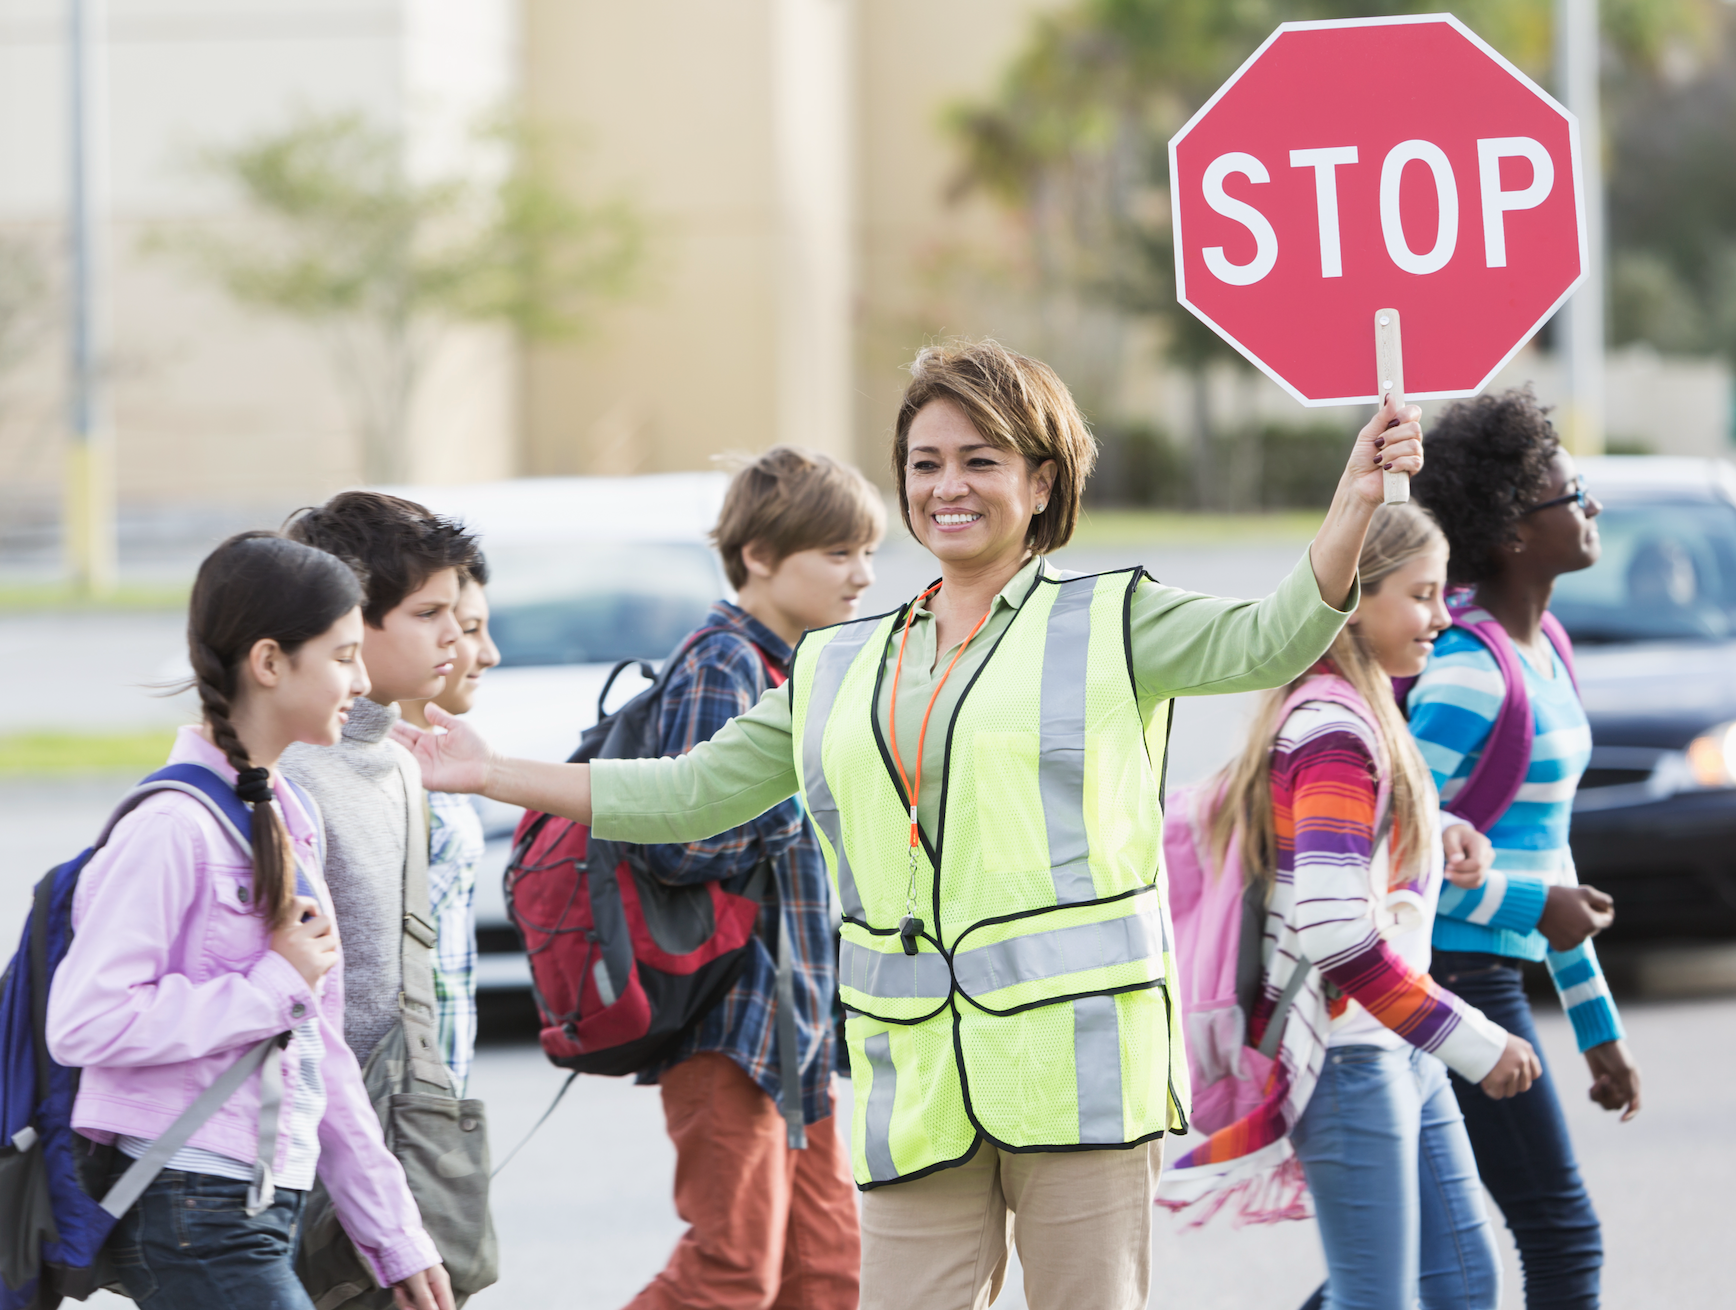 crossing guard helping kids cross the street for school